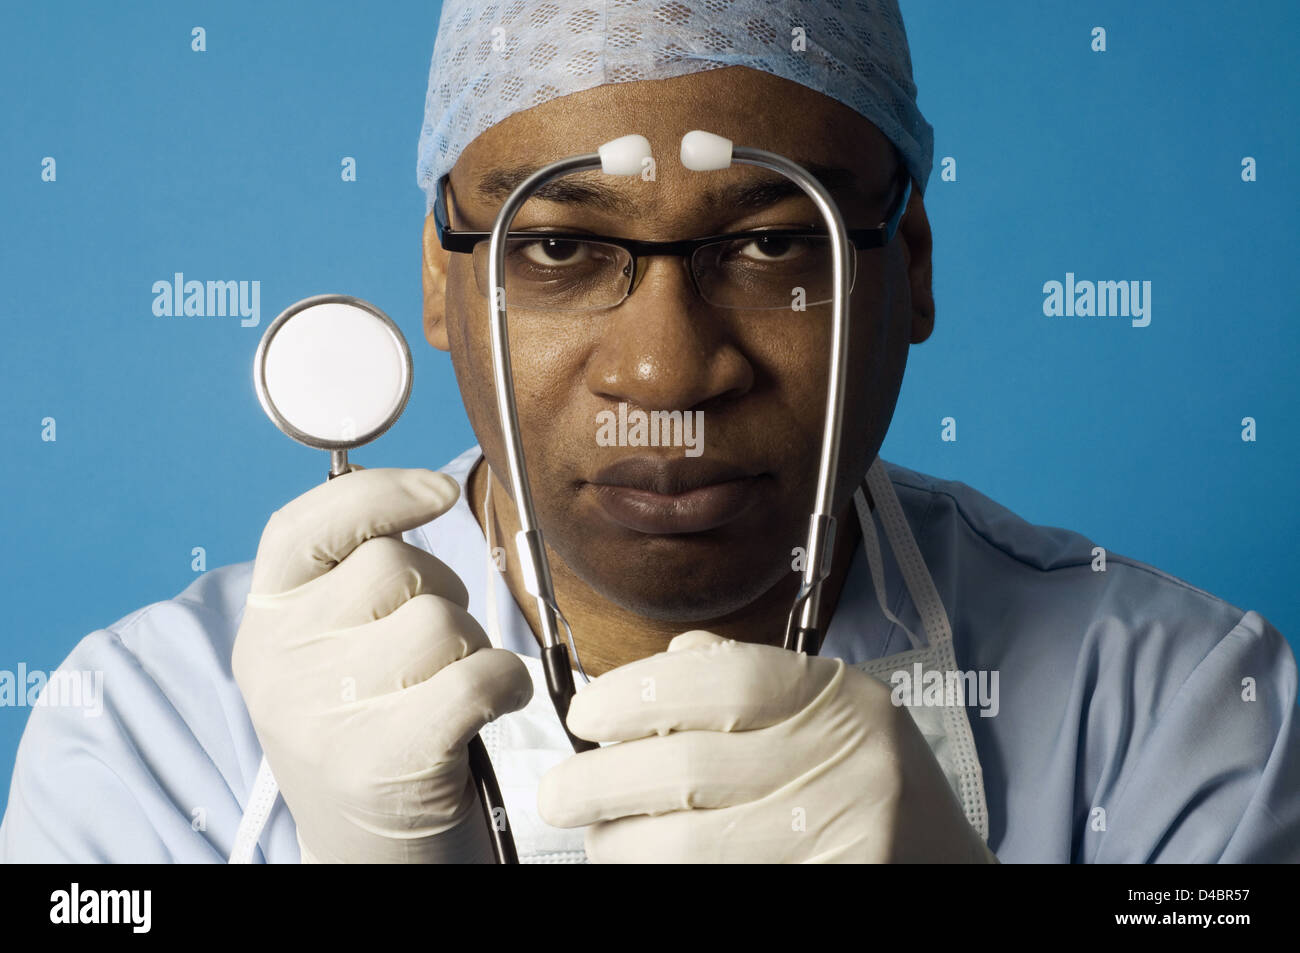 Portrait of surgeon in scrubs holding stethoscope Stock Photo